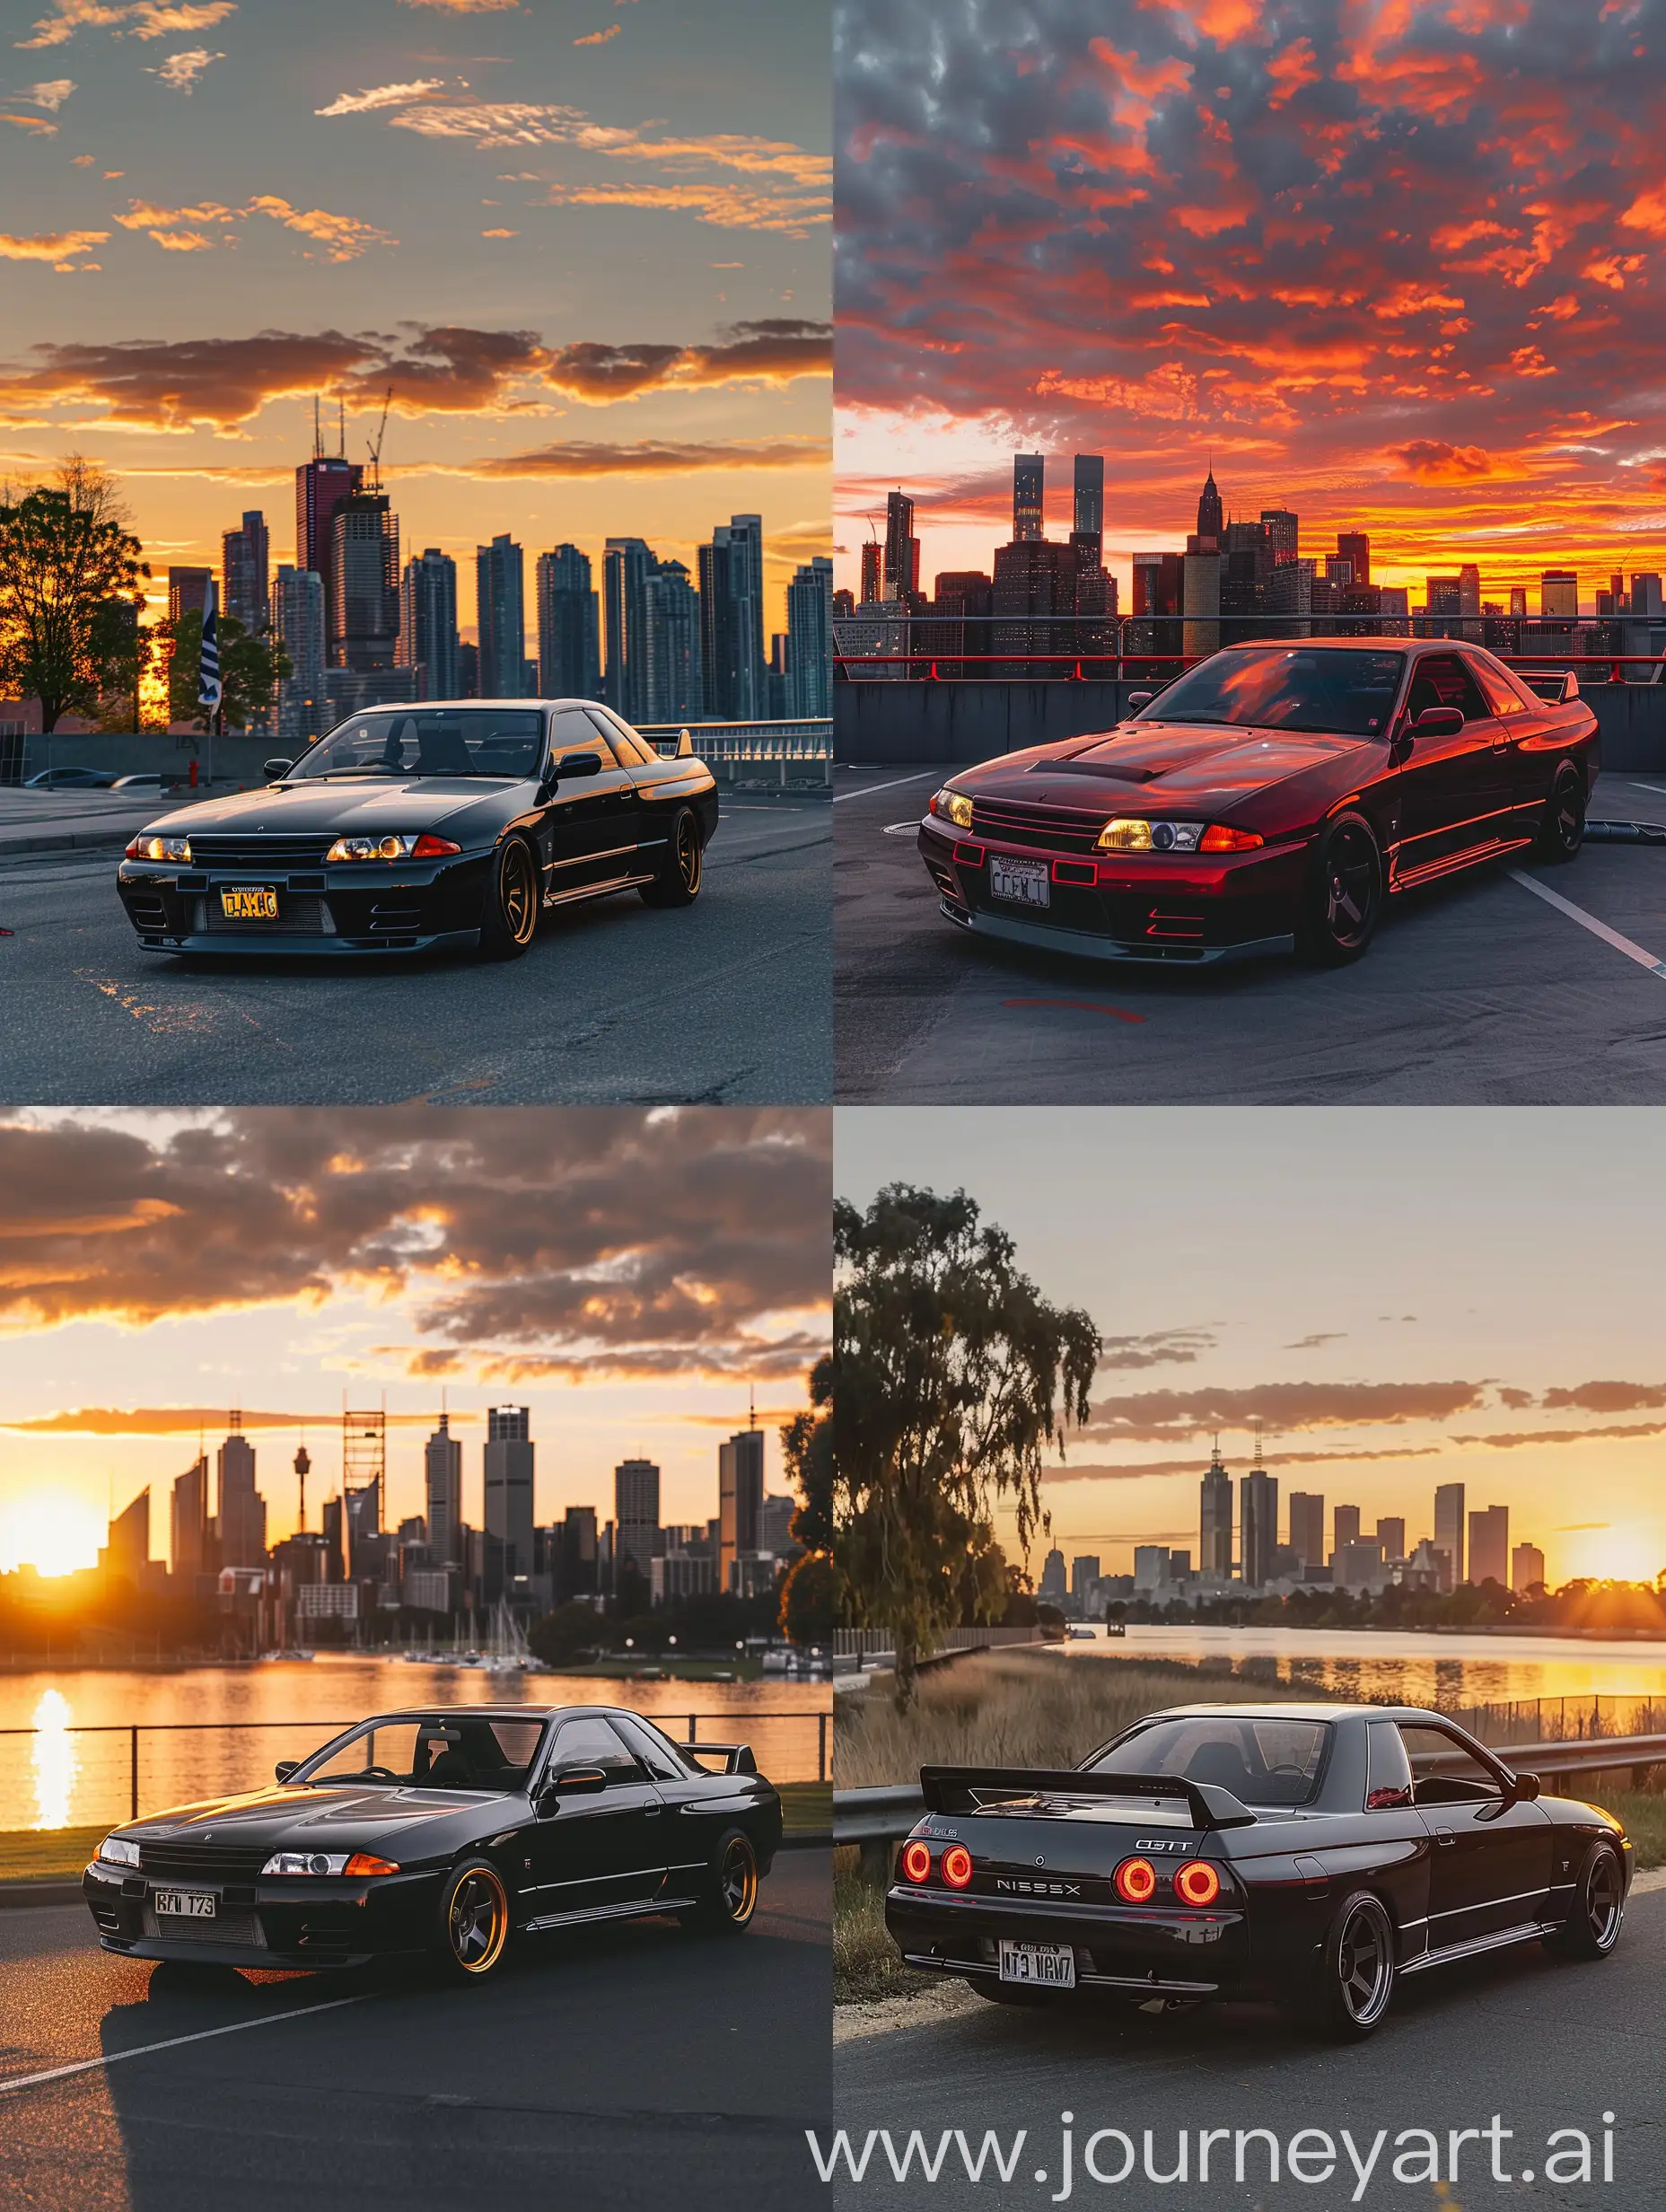 Spectacular-Sunset-View-of-Nissan-Skyline-R32-GTR-in-City-Skyline